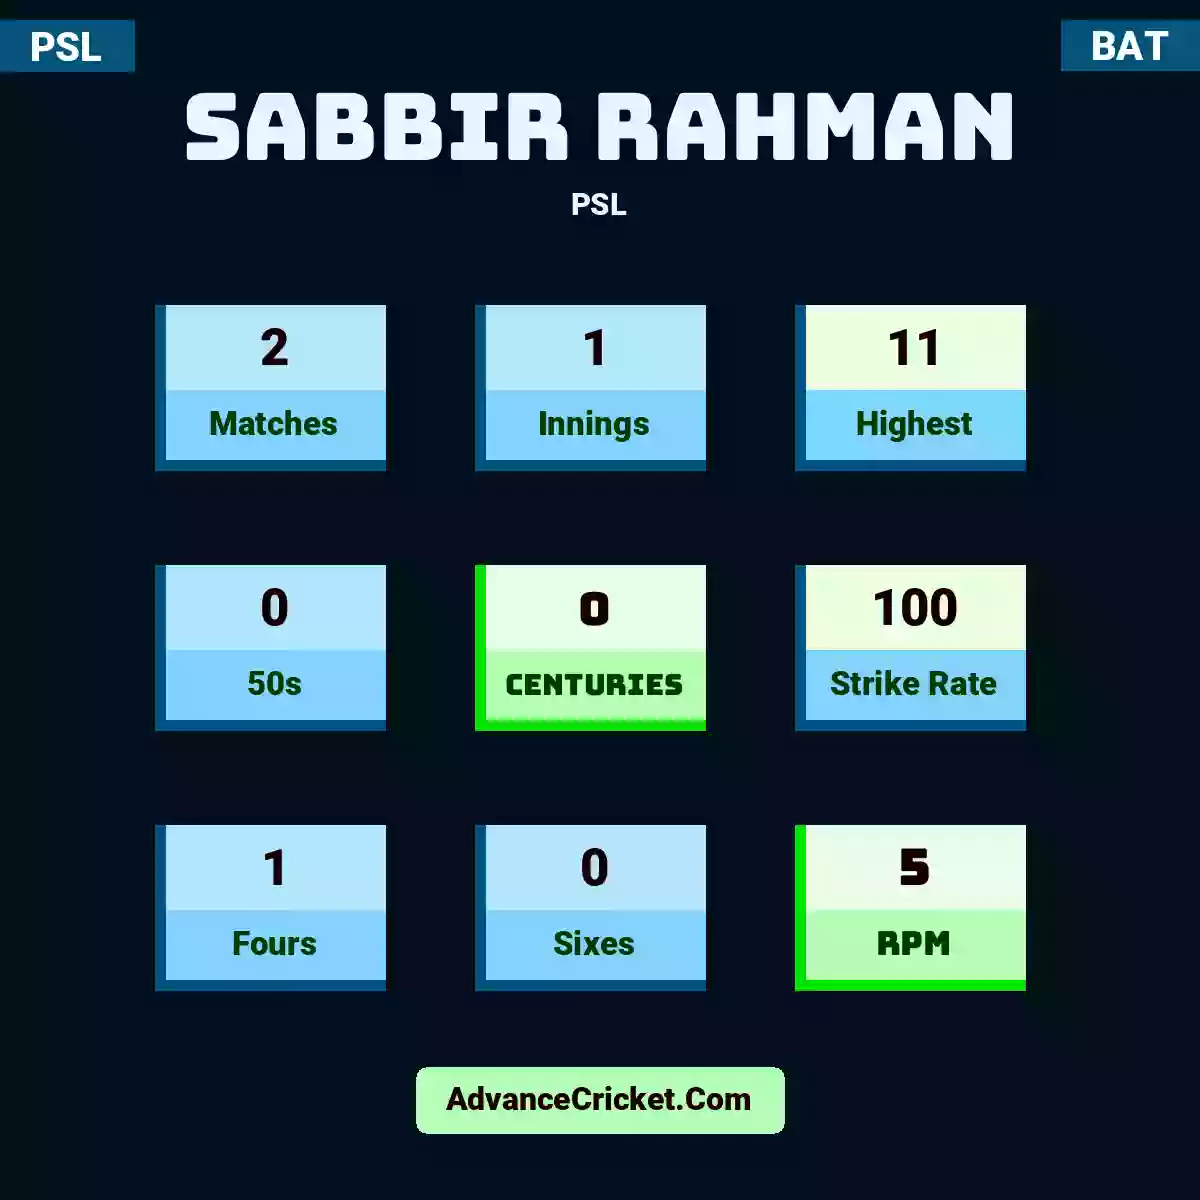 Sabbir Rahman PSL , Sabbir Rahman played 2 matches, scored 11 runs as highest, 0 half-centuries, and 0 centuries, with a strike rate of 100. S.Rahman hit 1 fours and 0 sixes, with an RPM of 5.